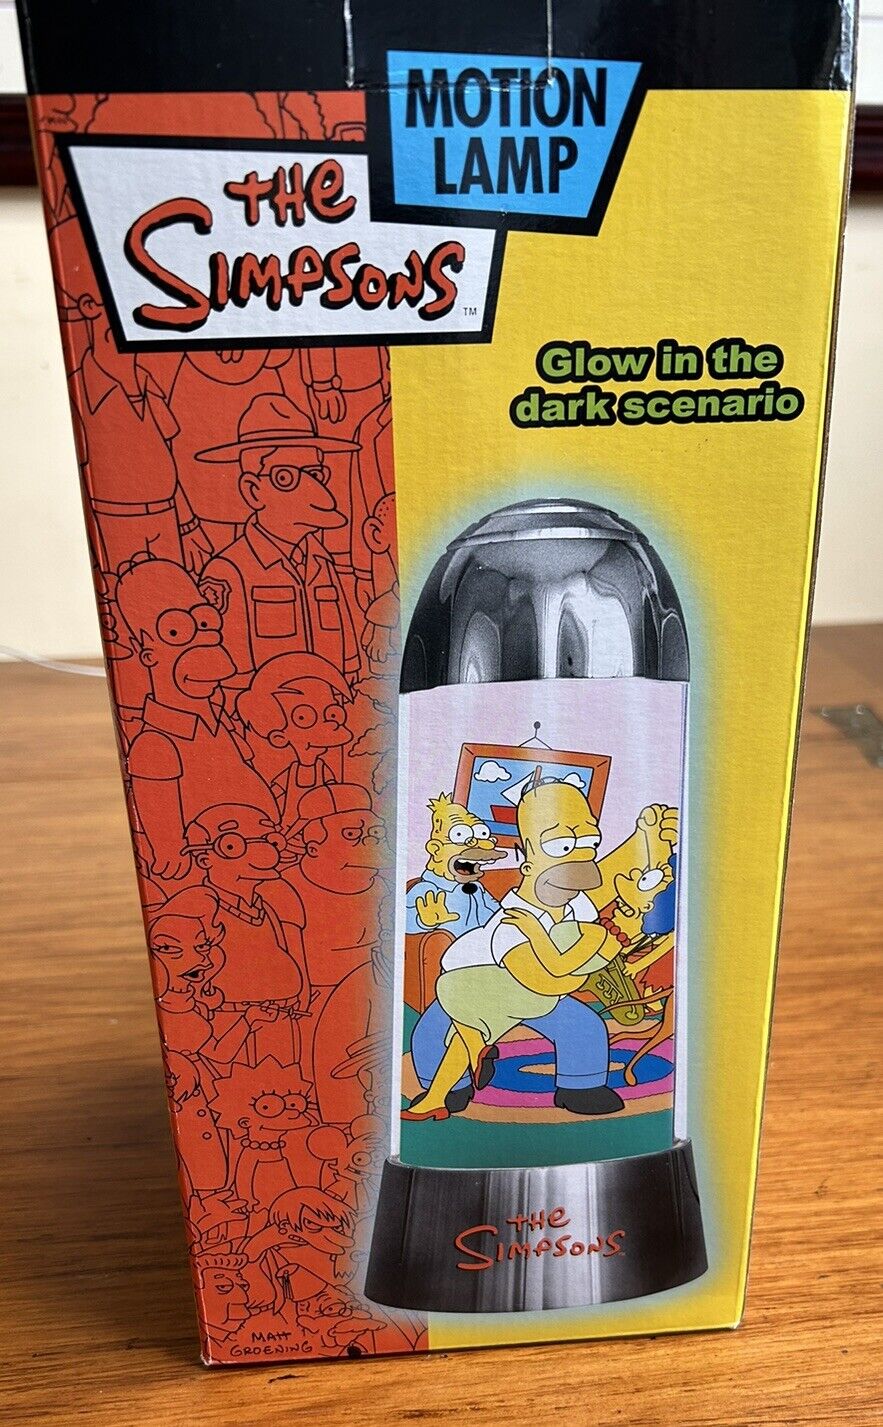 The Simpsons Motion Lamp Glow In The Dark Scenario Vintage 2002 New In Box